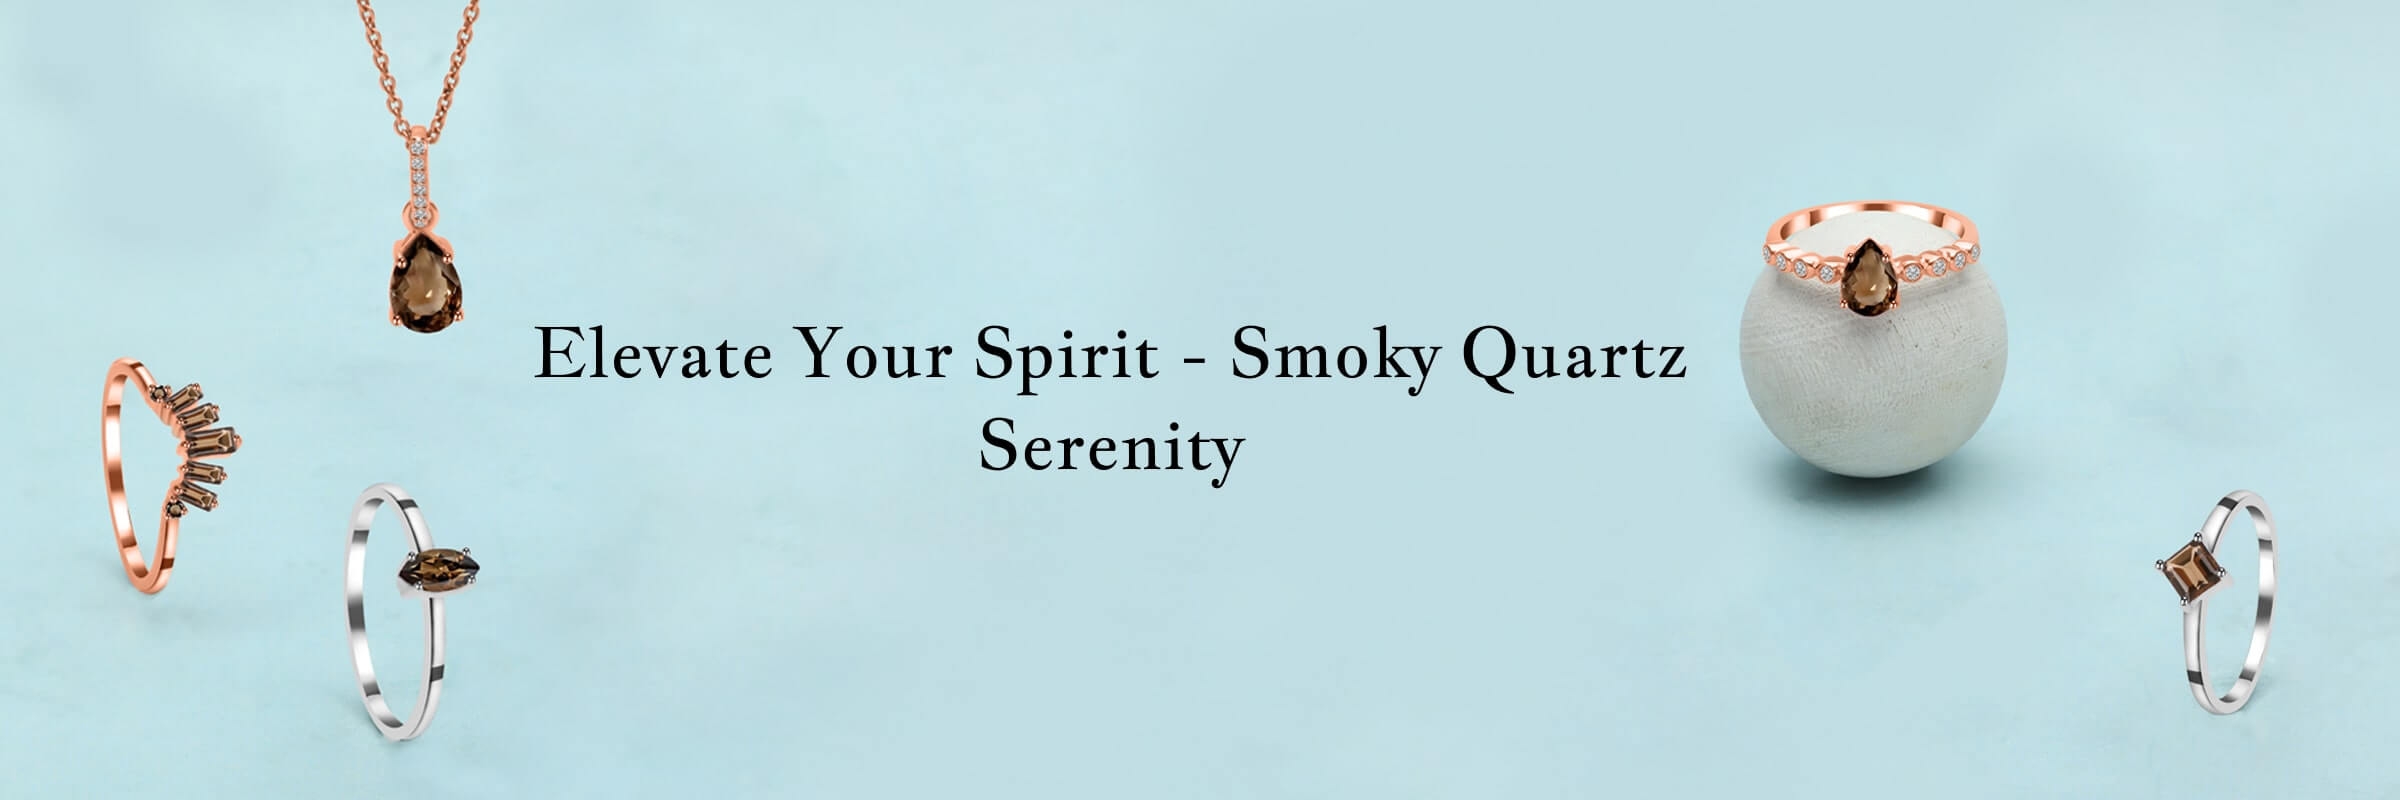 Smoky Quartz Spiritual Healing Properties